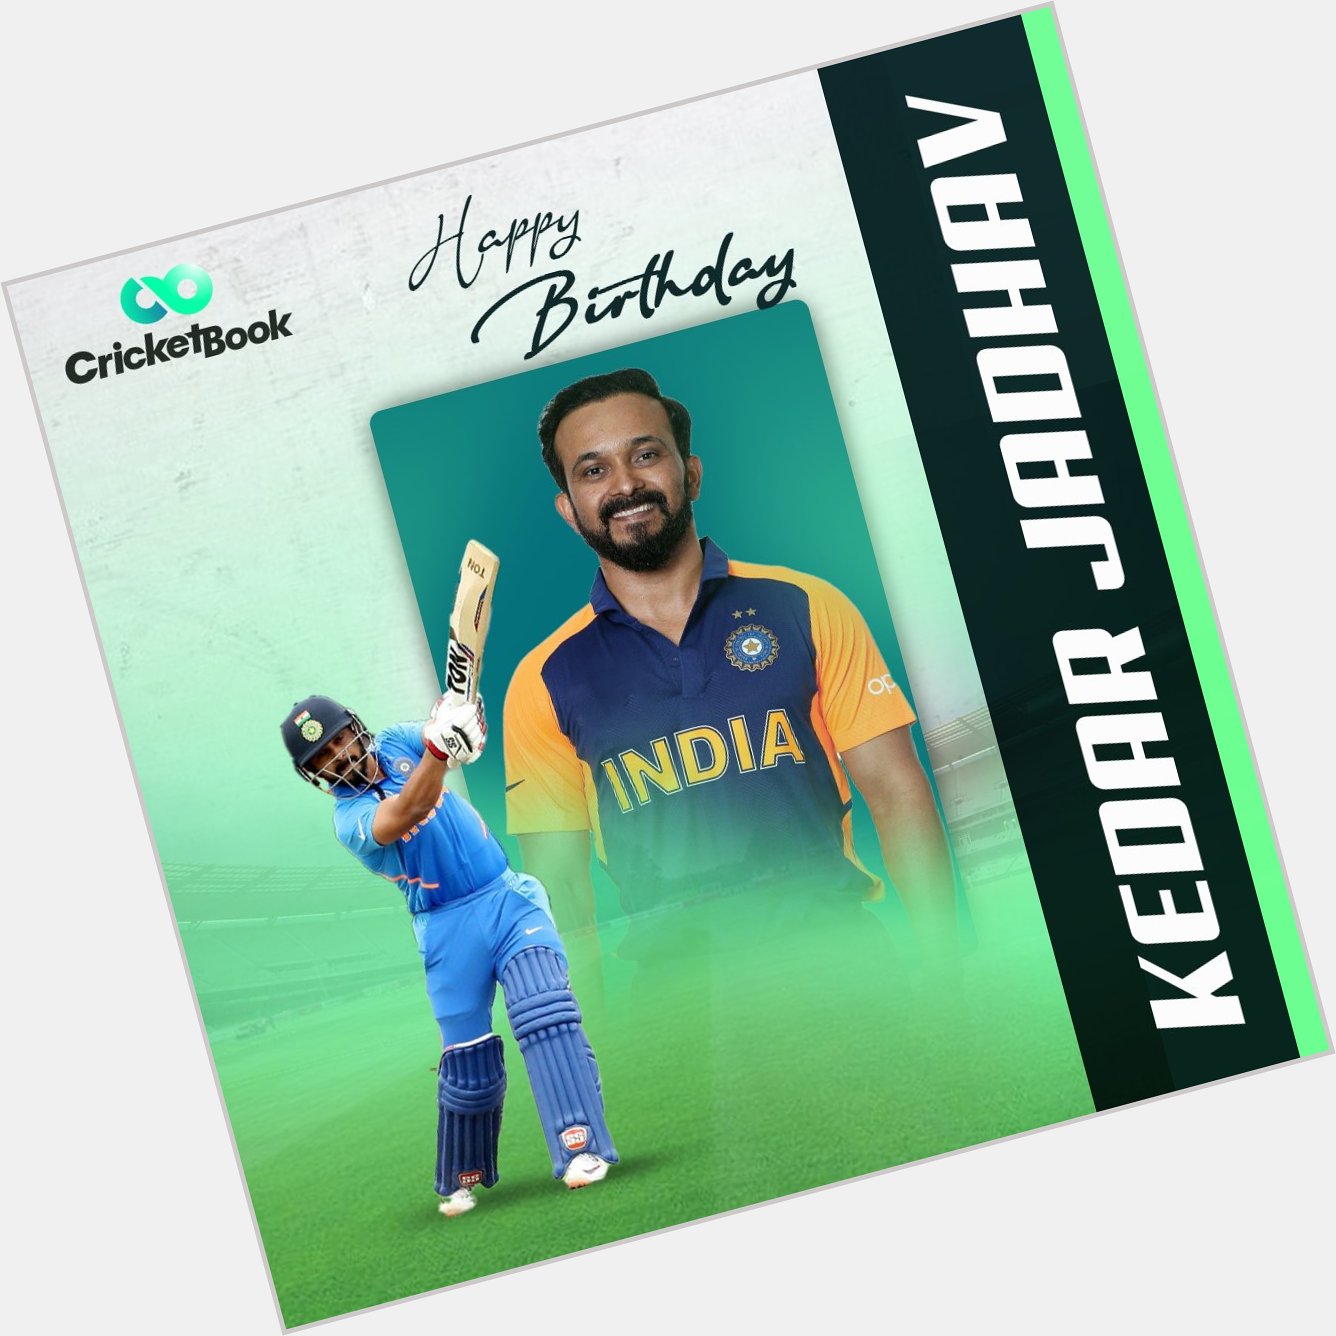 Wishing Kedar Jadhav a very Happy Birthday!   